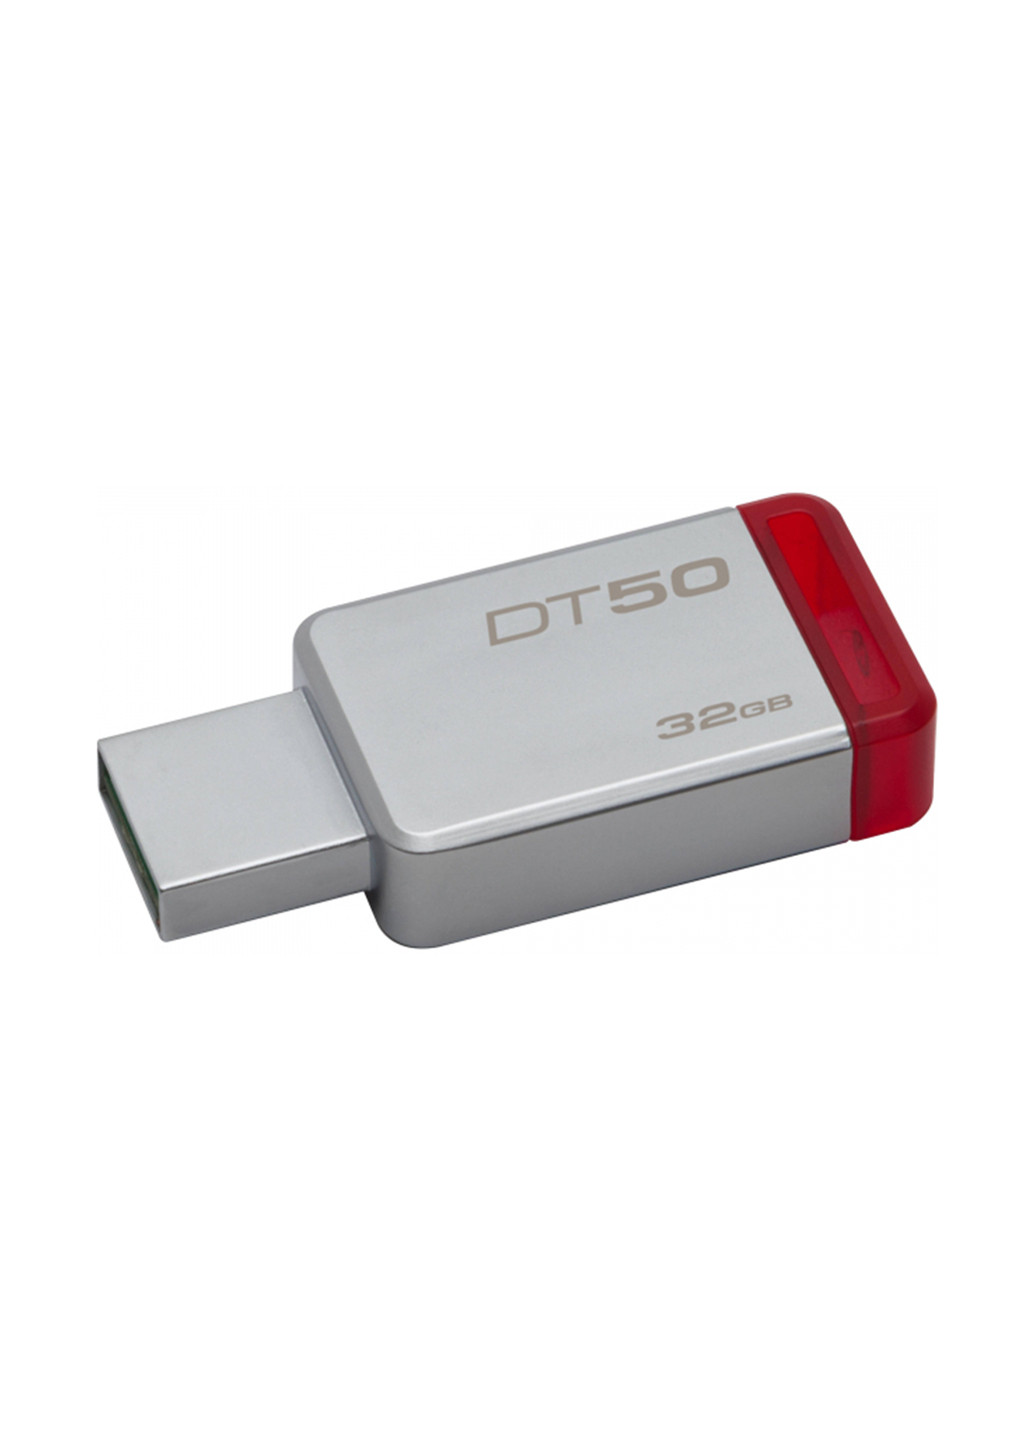 Флеш пам'ять USB DataTraveler 50 32GB Red (DT50 / 32GB) Kingston флеш память usb kingston datatraveler 50 32gb red (dt50/32gb) (136742776)